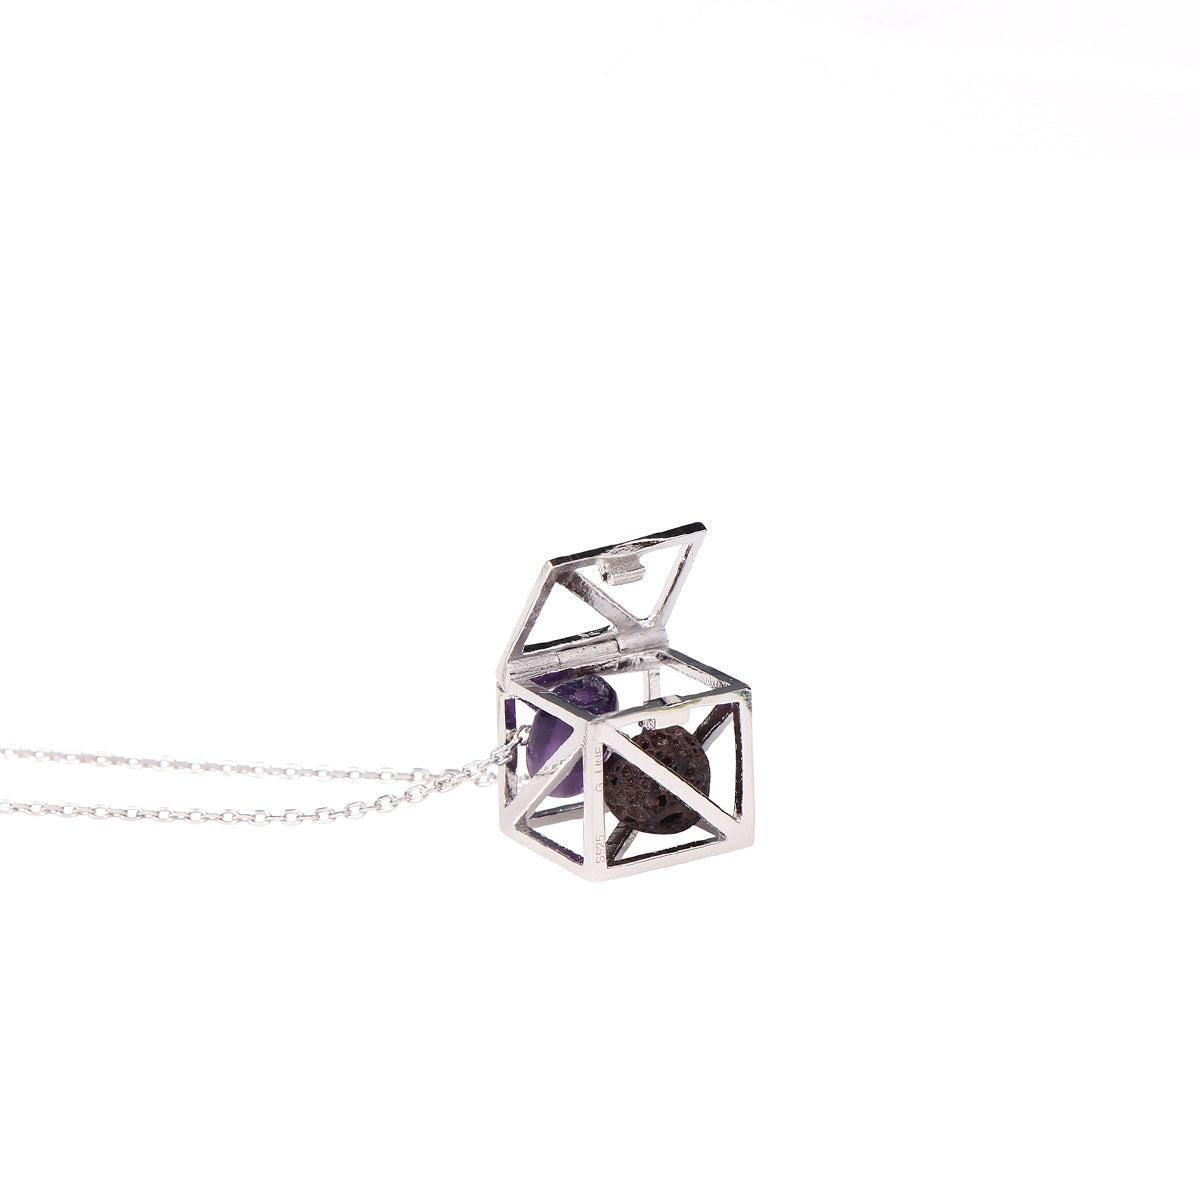 Cube of Calm: Gosia Orlowska's "Sophia" Diffuser Necklace